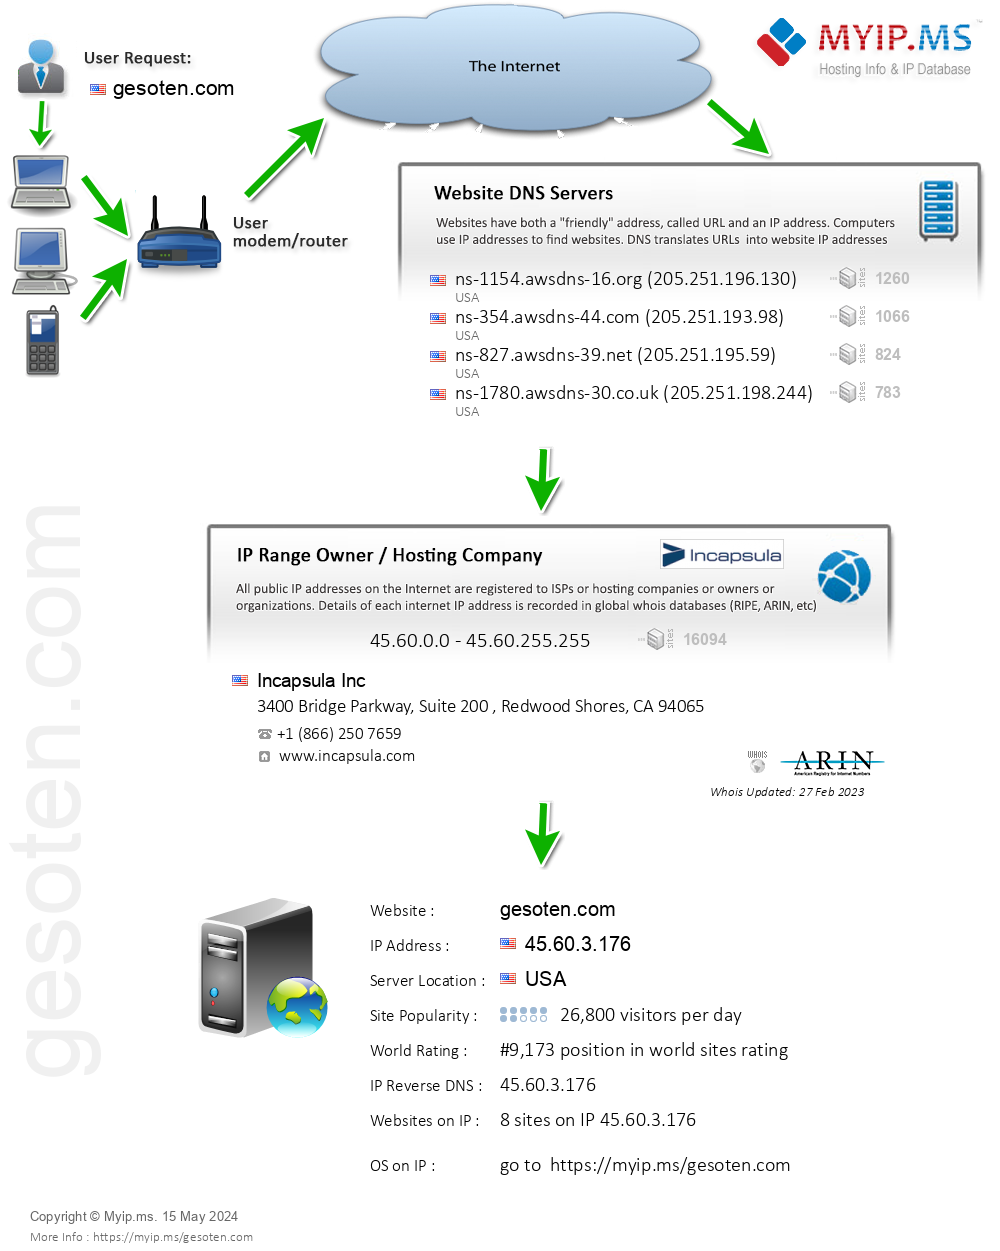 Gesoten.com - Website Hosting Visual IP Diagram